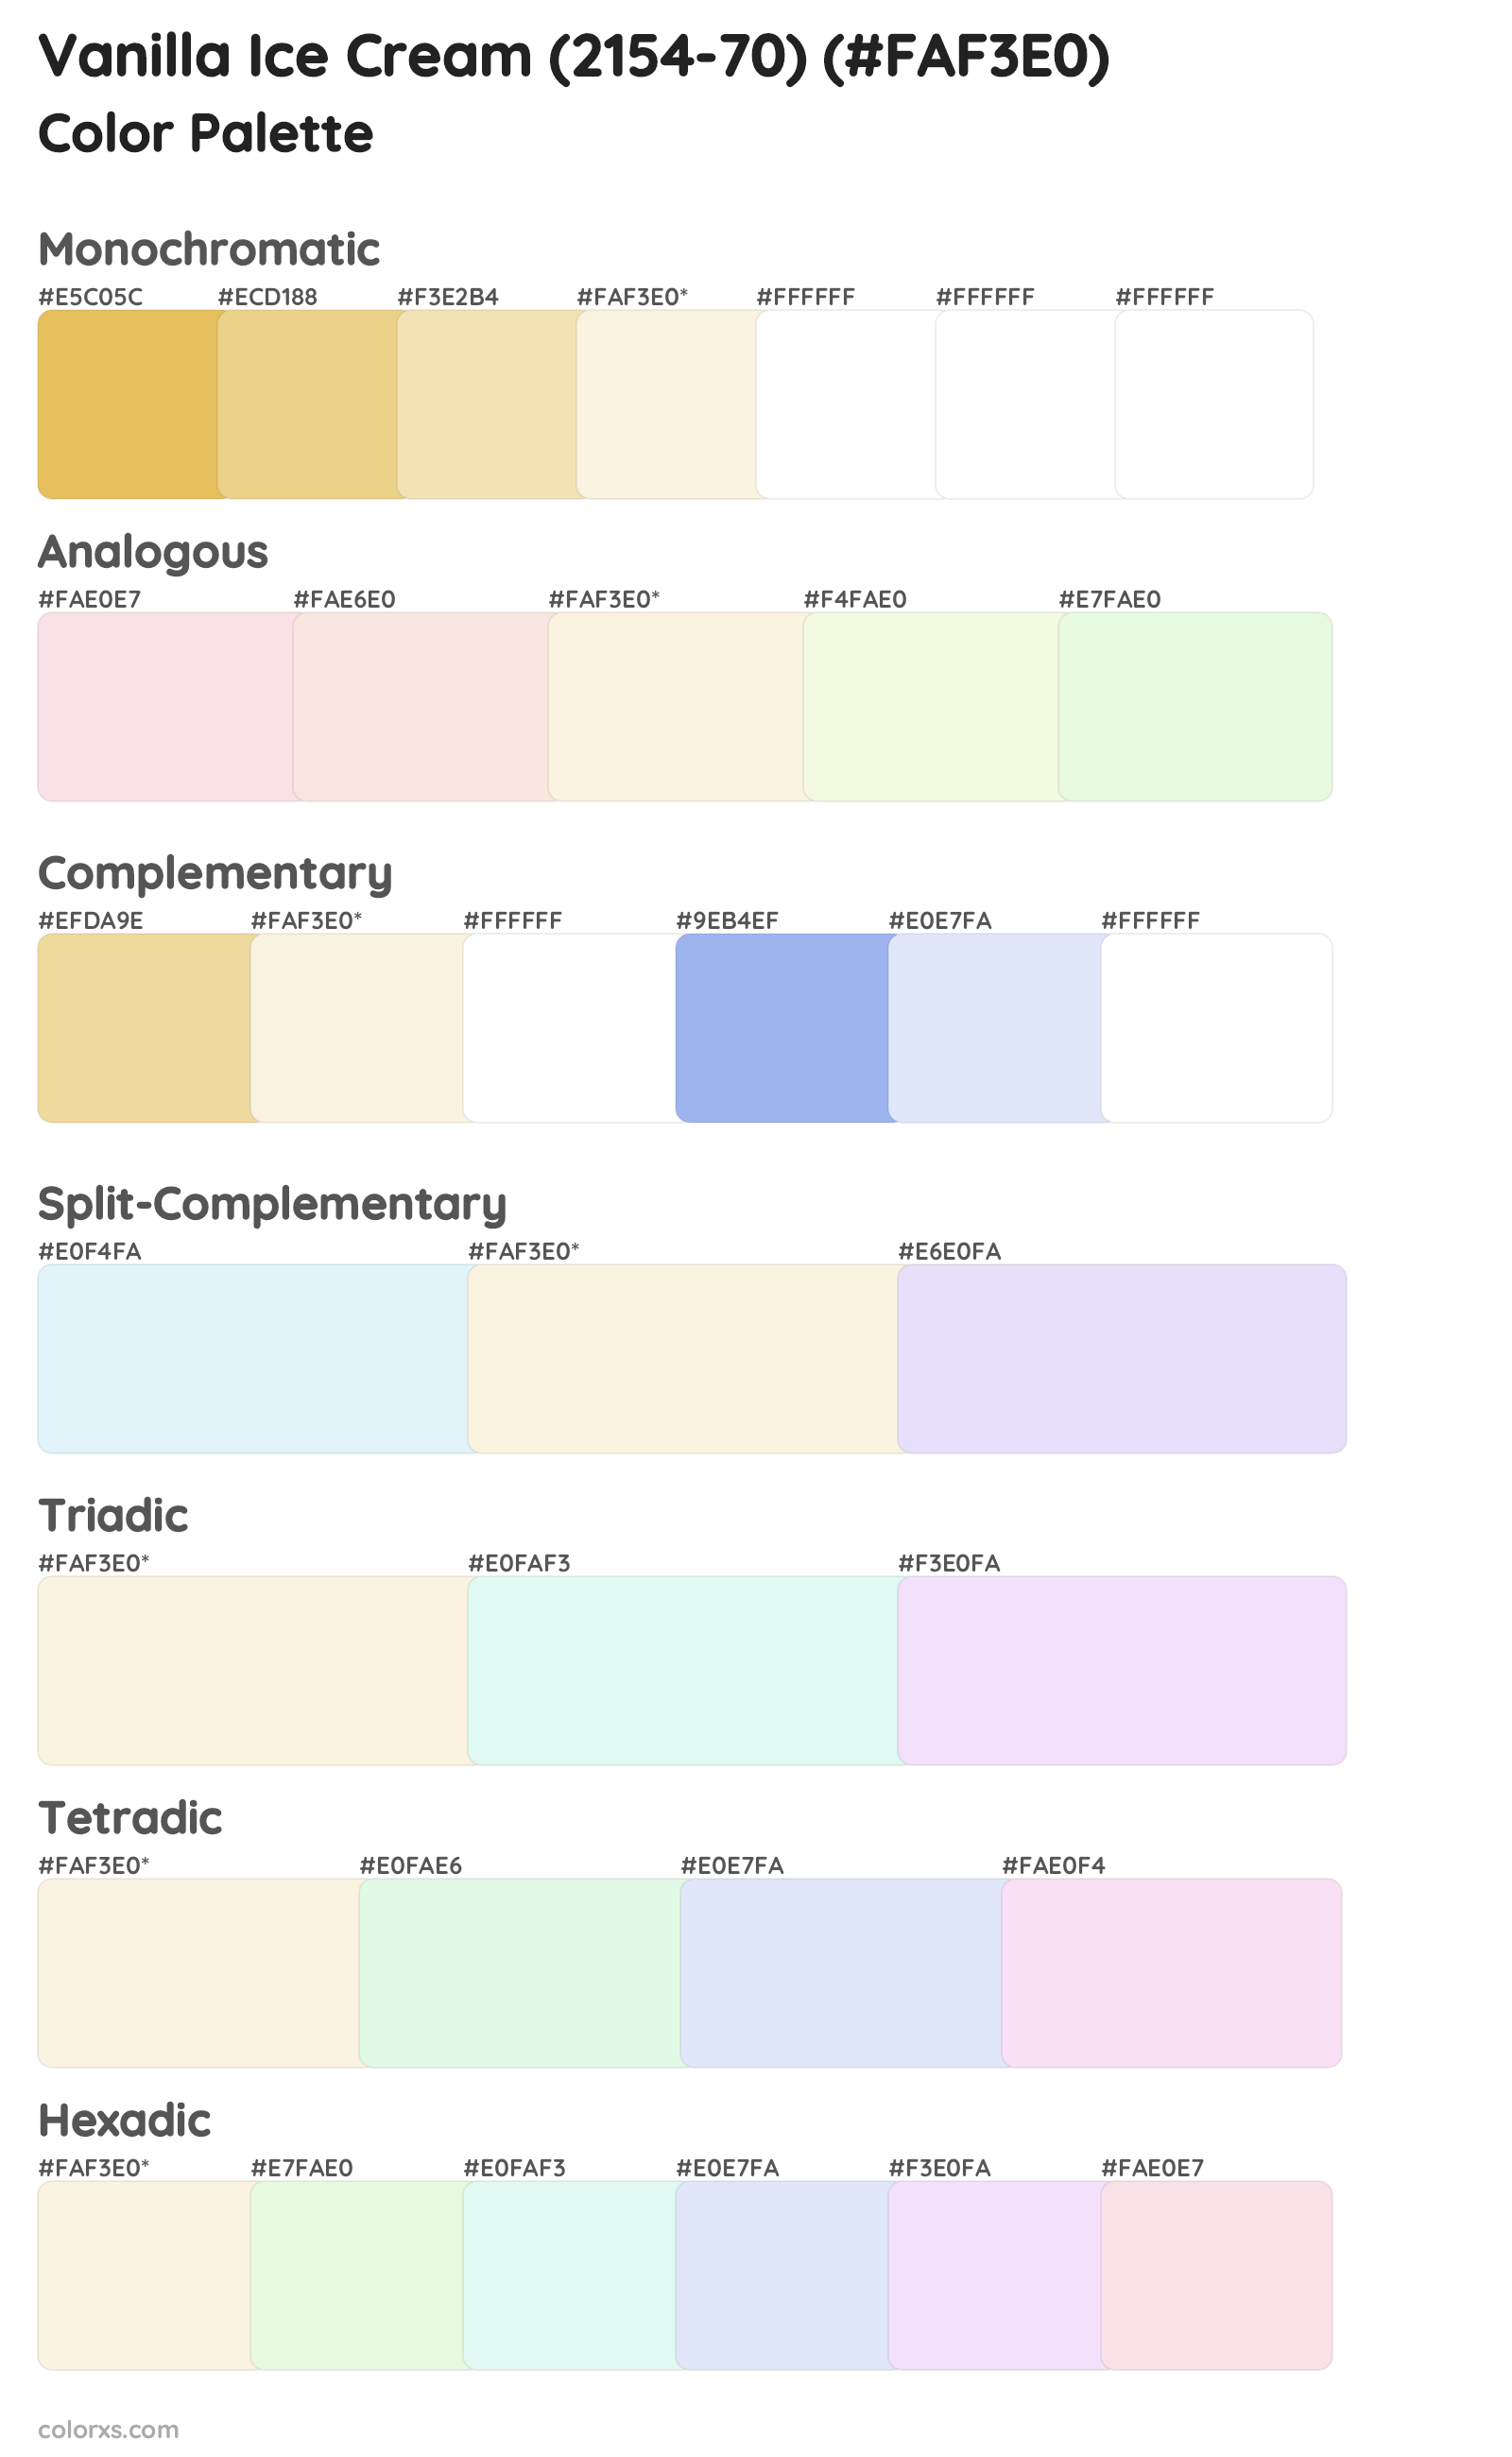 Vanilla Ice Cream (2154-70) Color Scheme Palettes